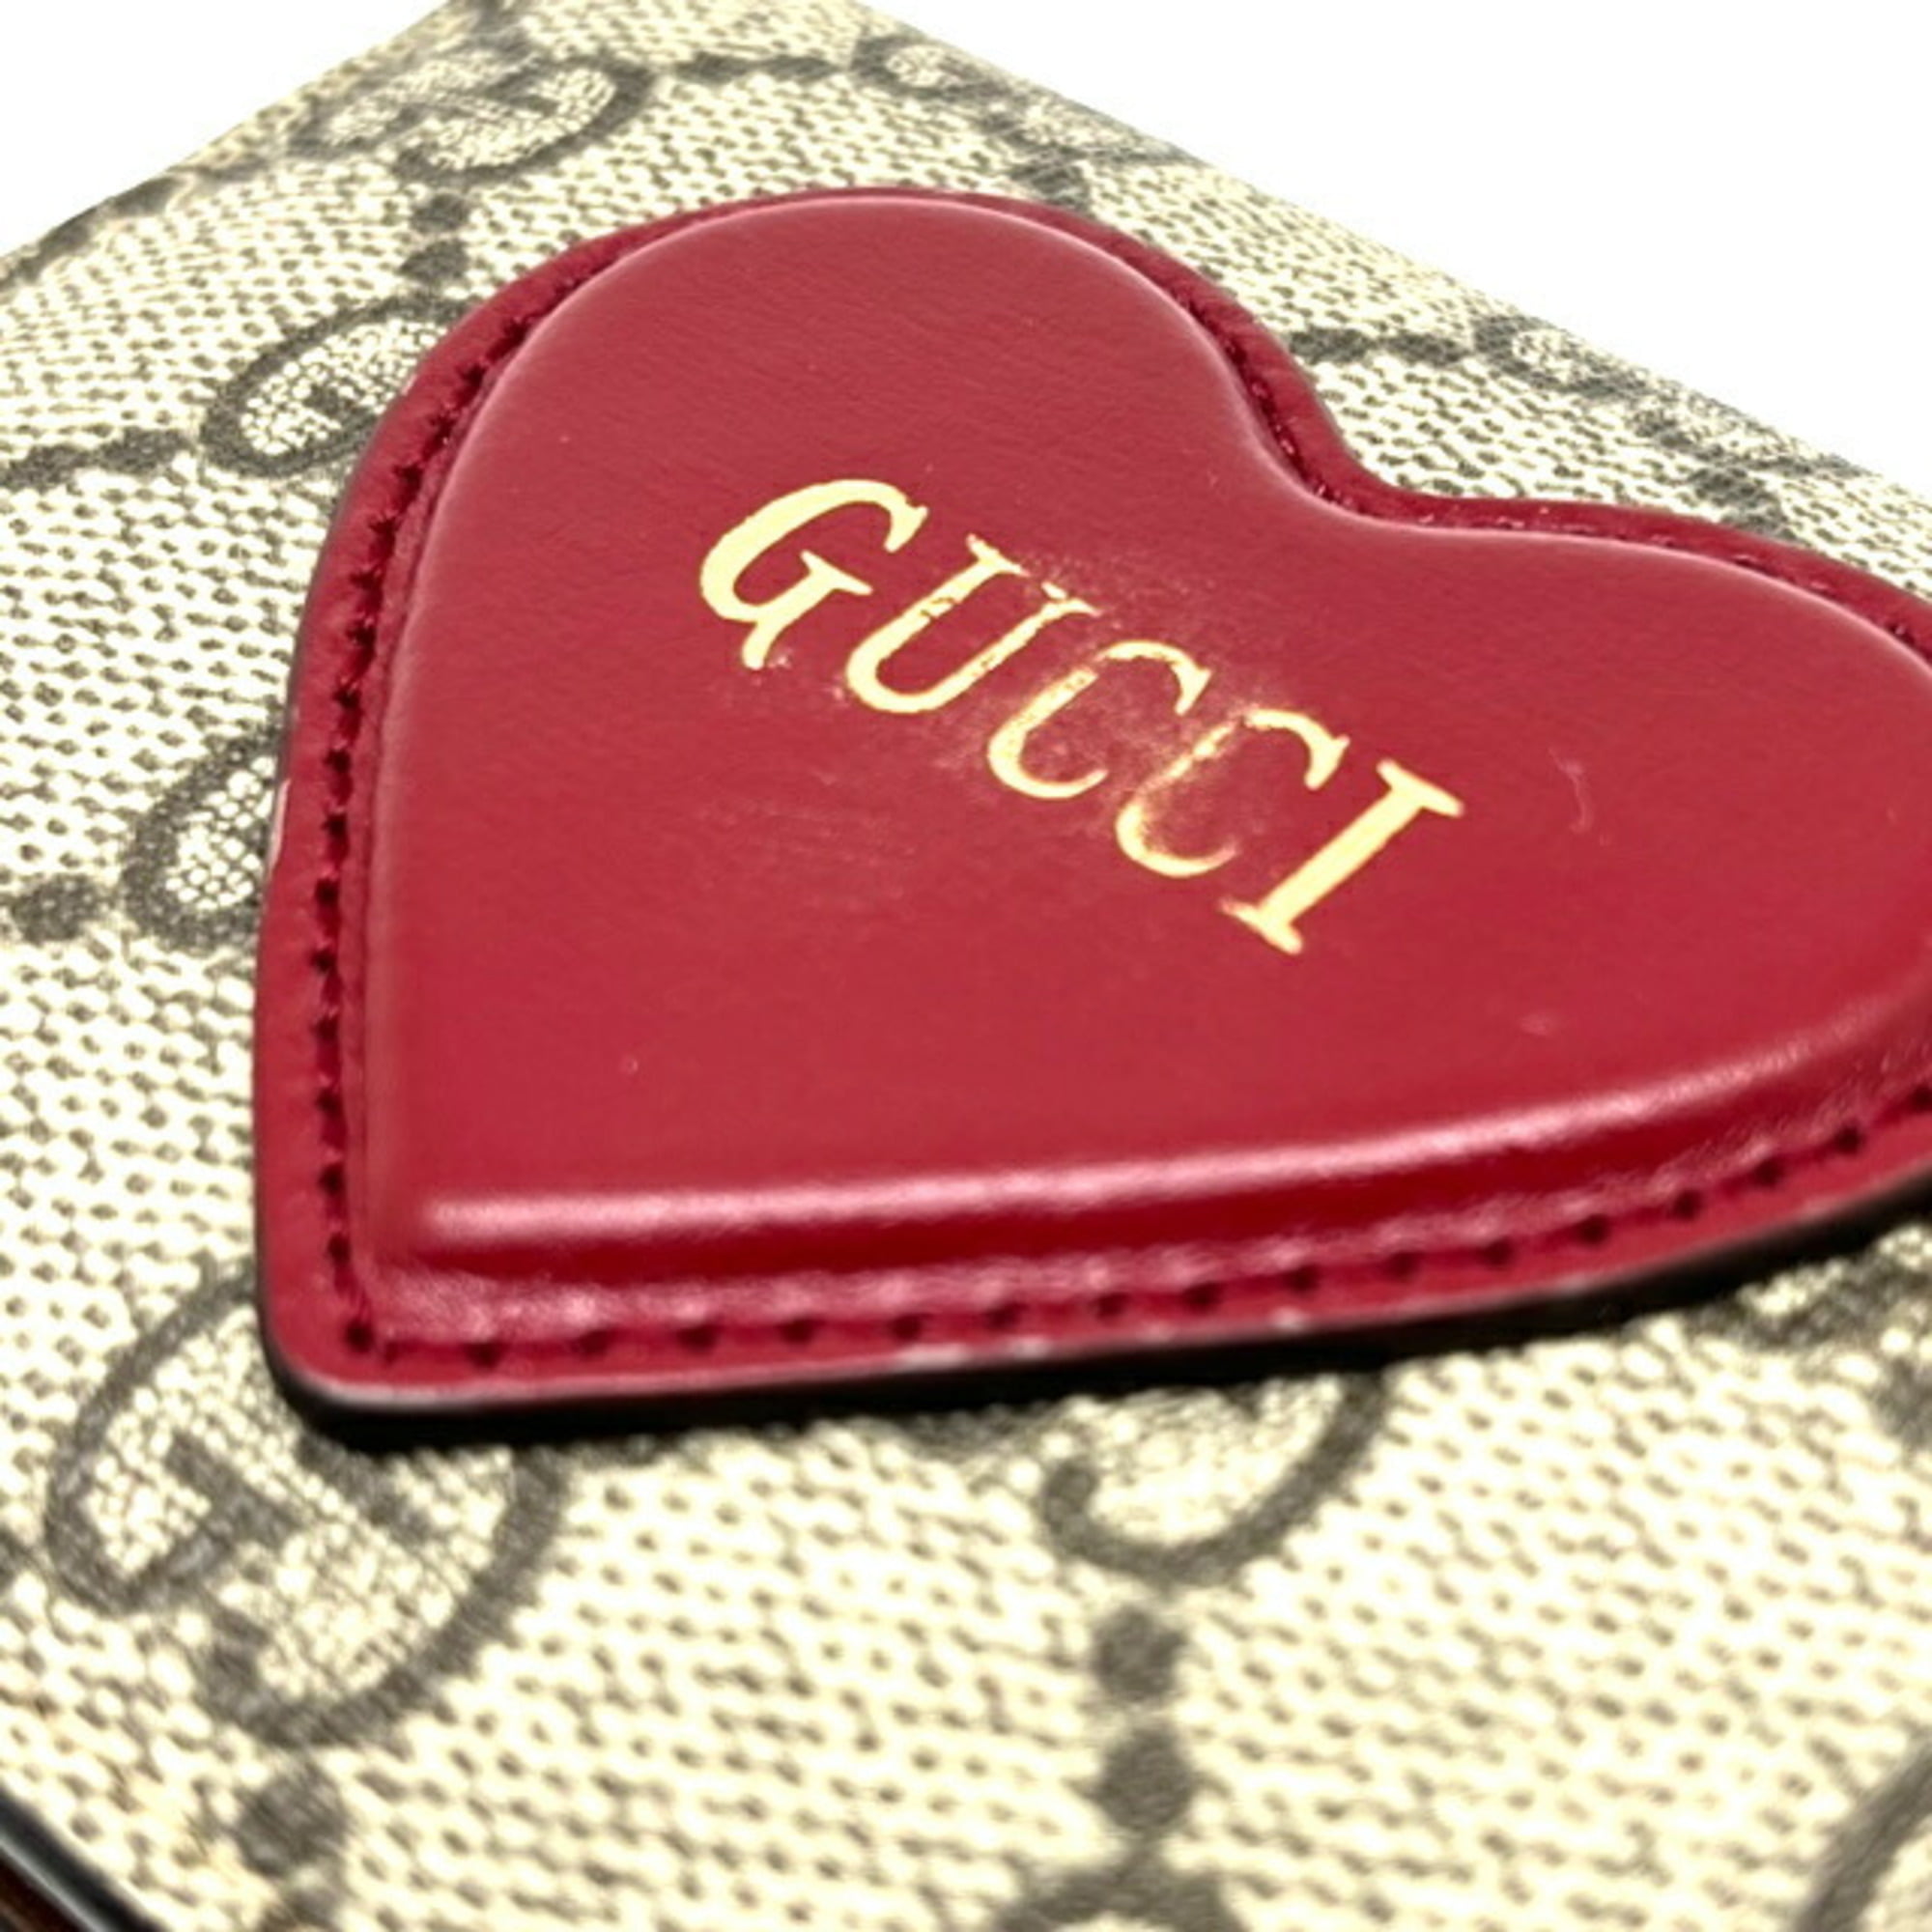 Gucci Red Original GG Supreme Heart Wallet-On-Chain QFB4XU0L0B000